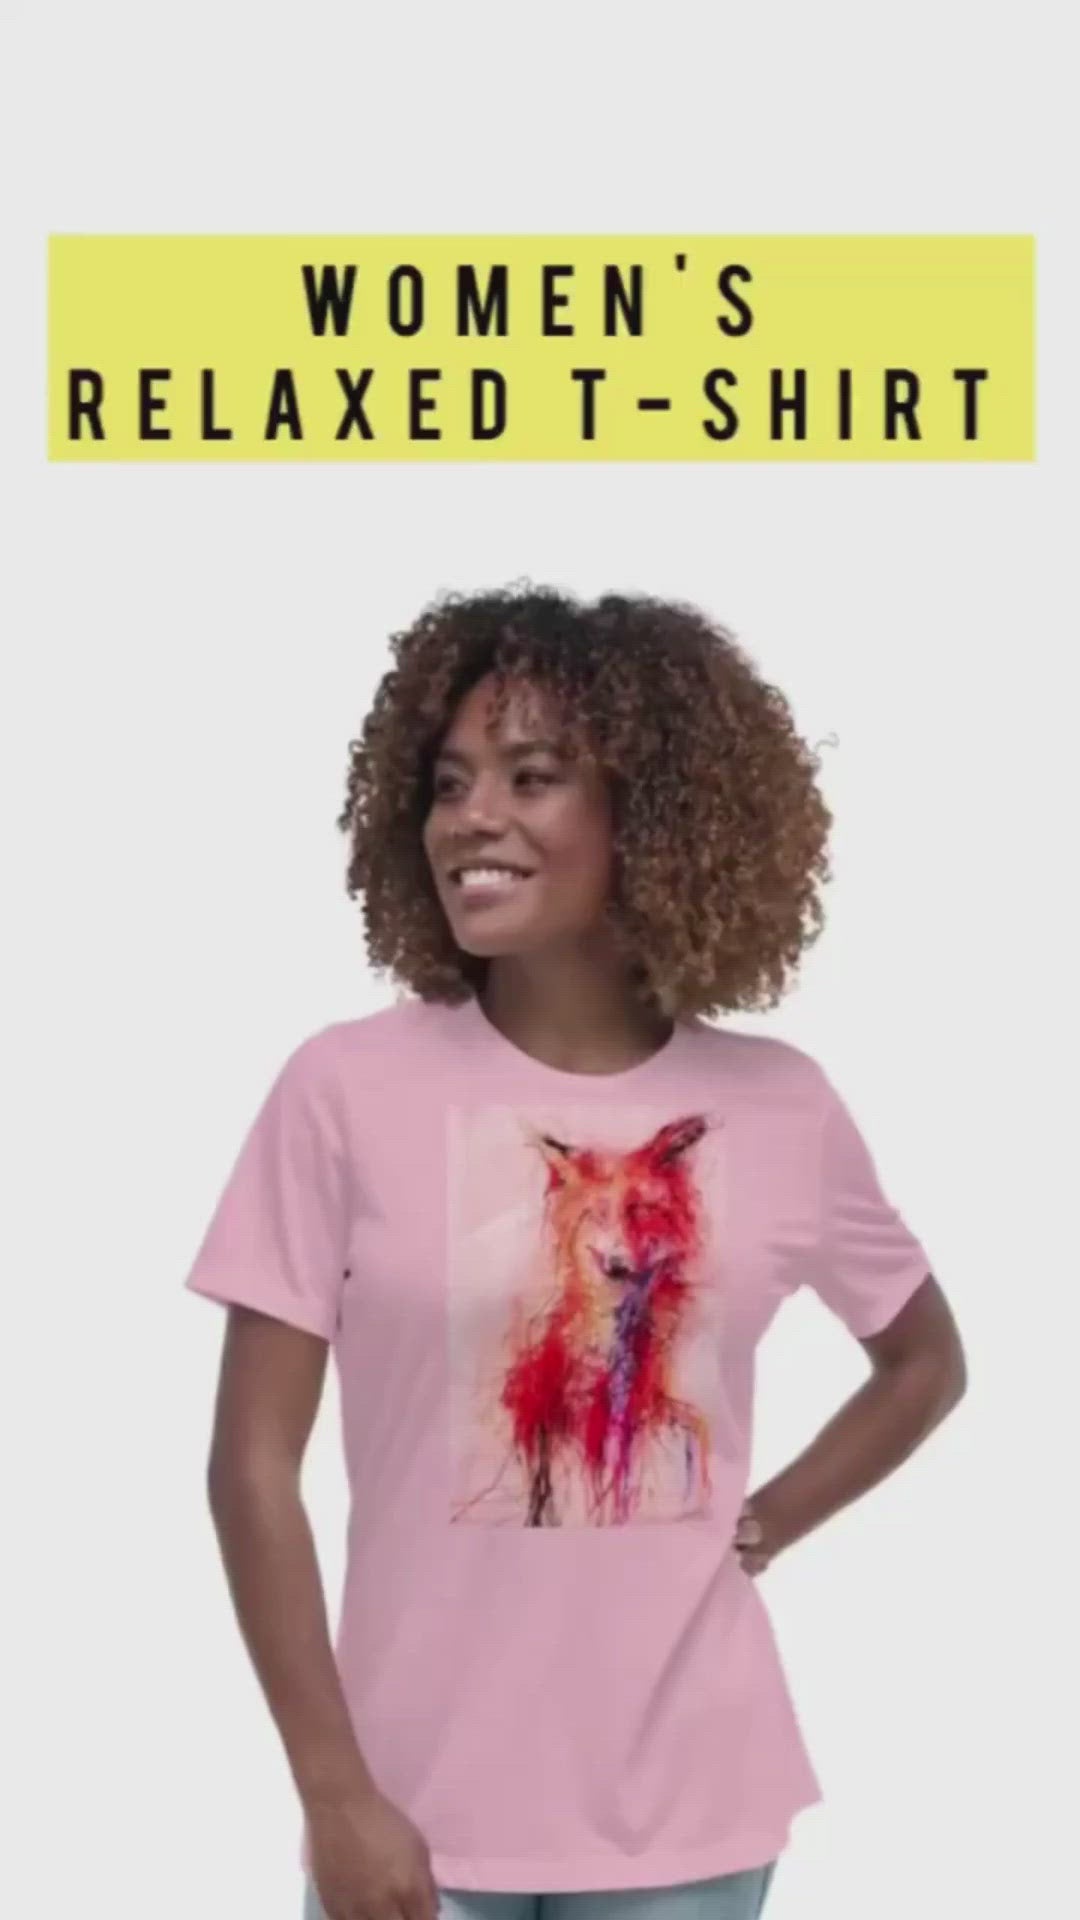 Pink tee shirt with exclusive artwork "Urban fox" print